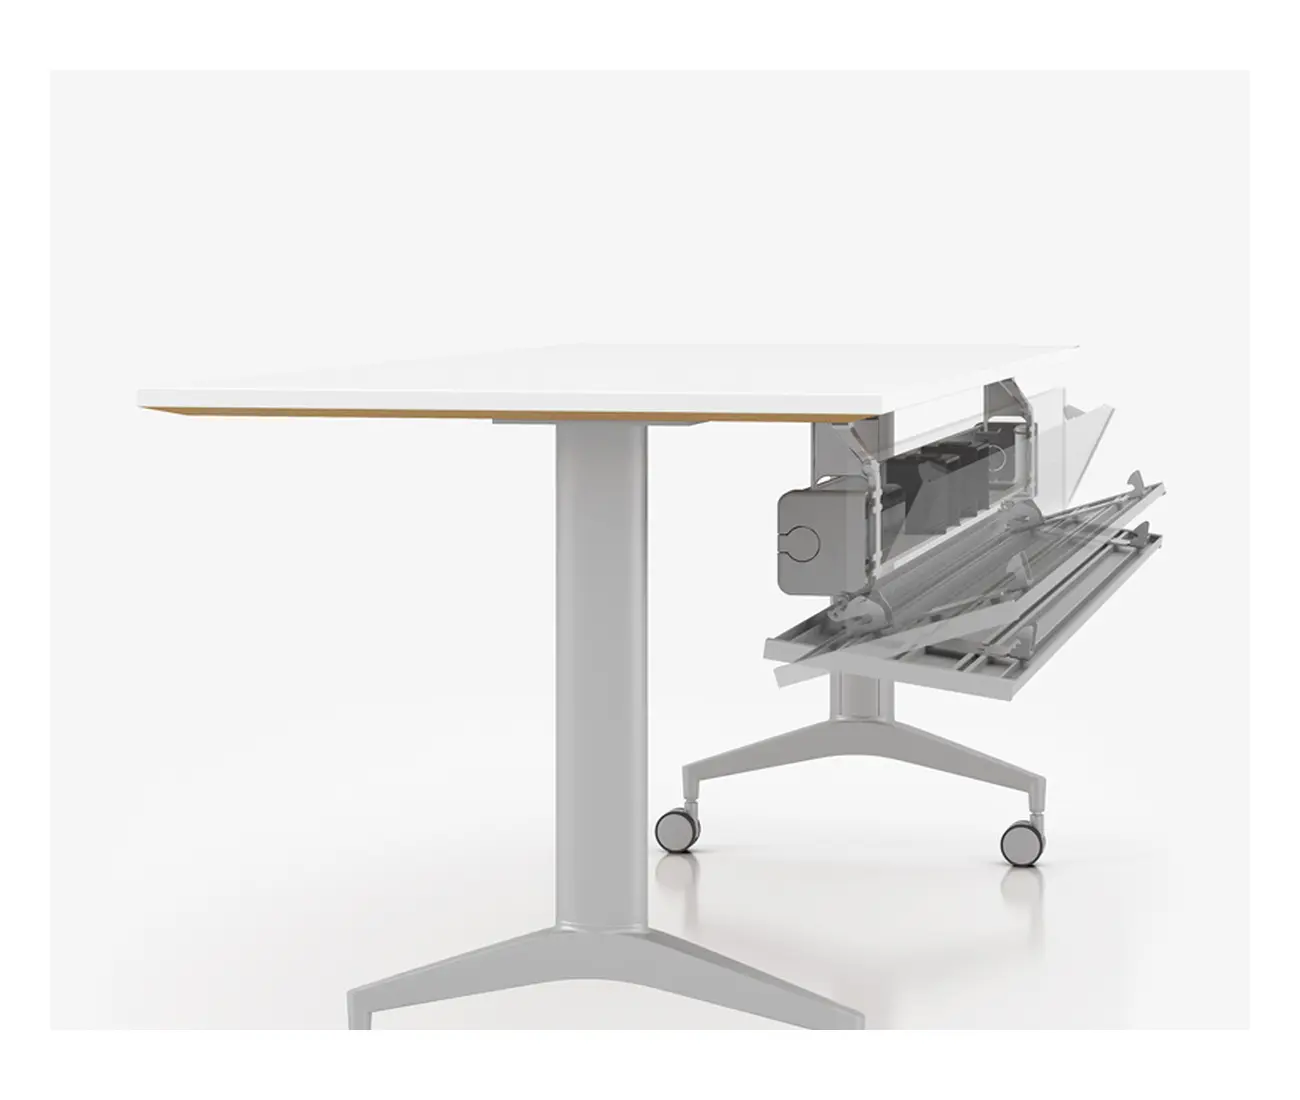 Krug-Revo-Category-6-Mikmaq-Office-Furniture-8.webp